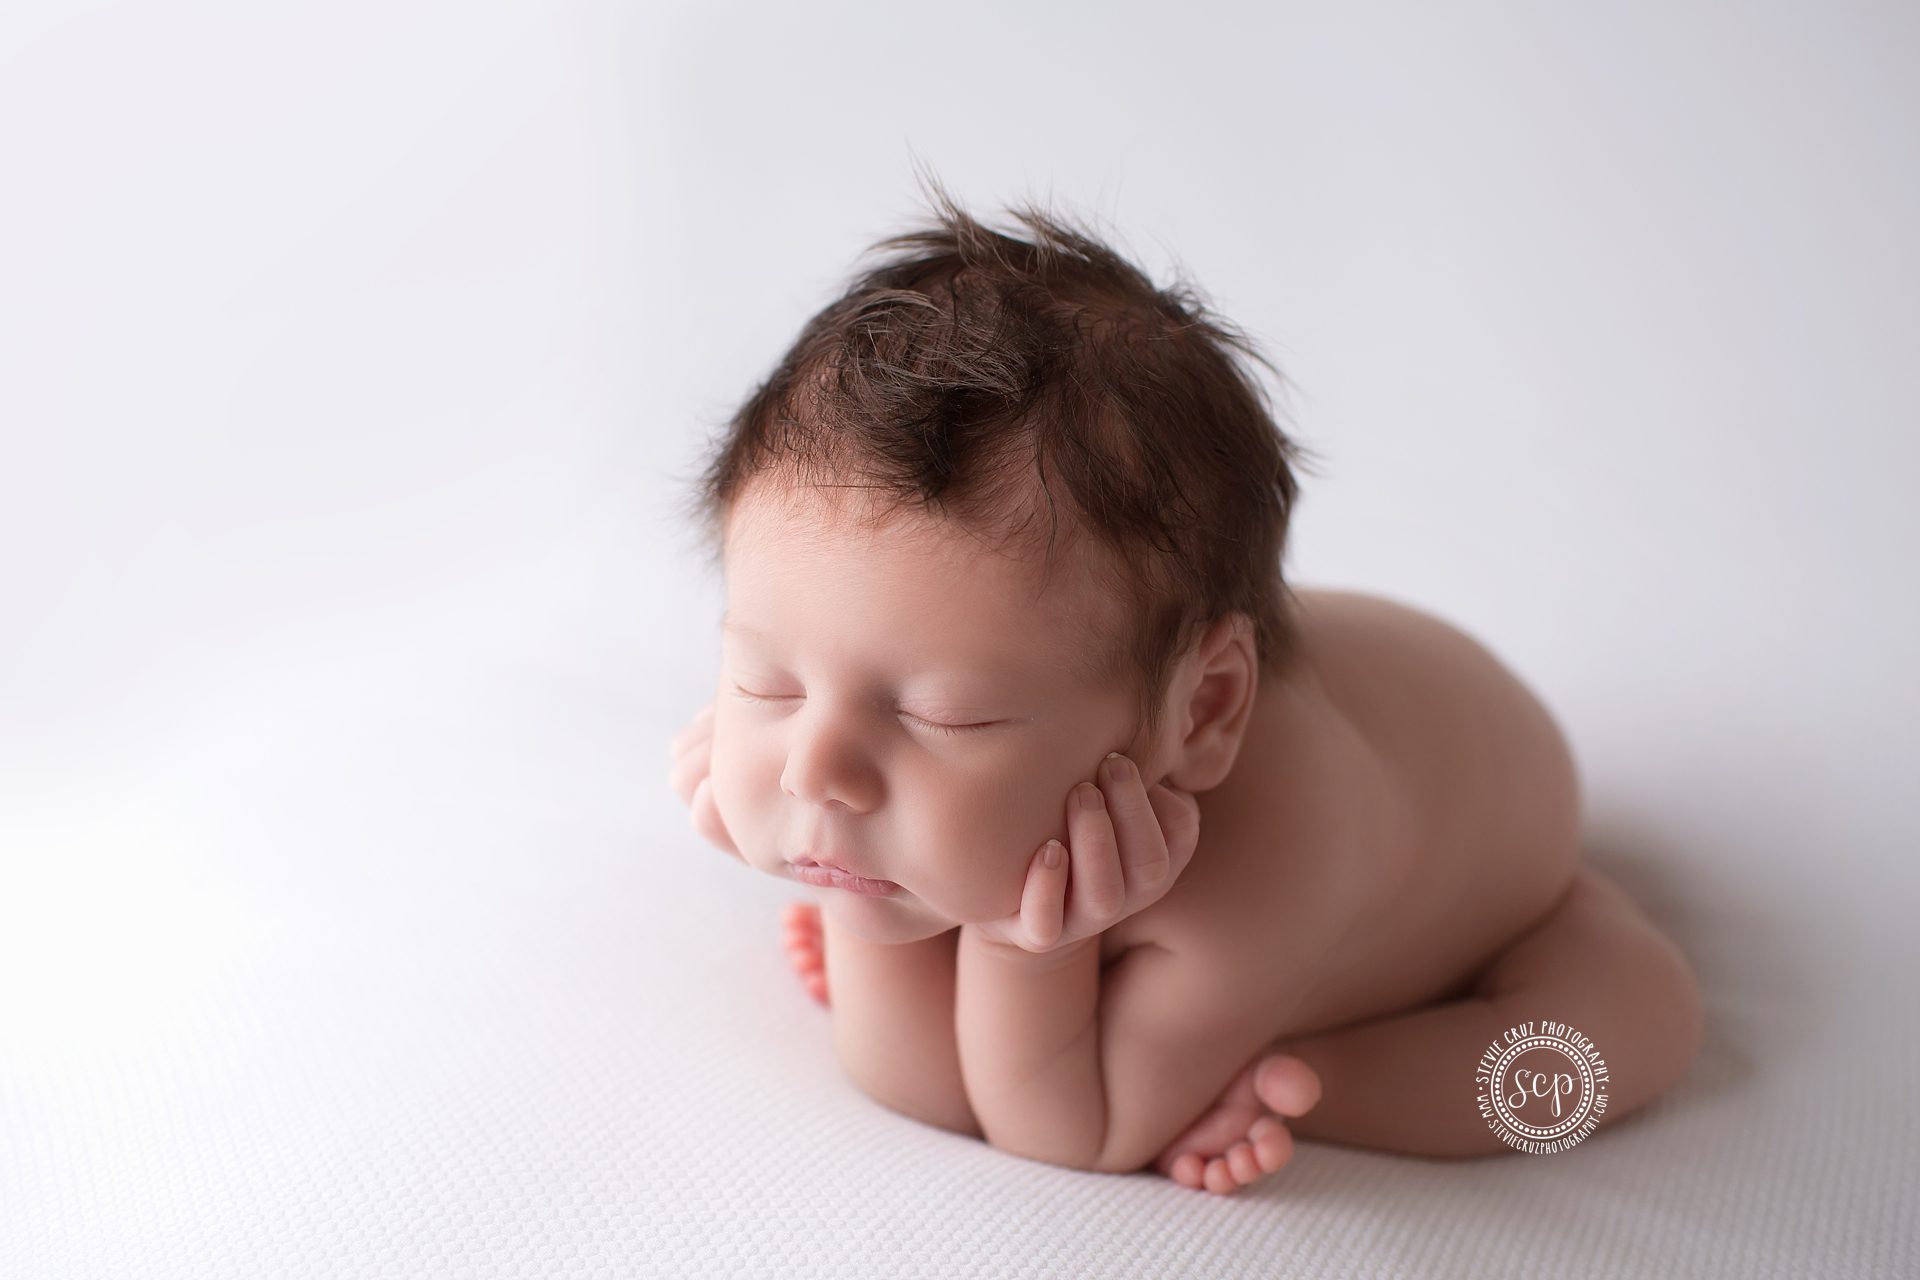 pose ideas for sleeping baby boy newborn photos 